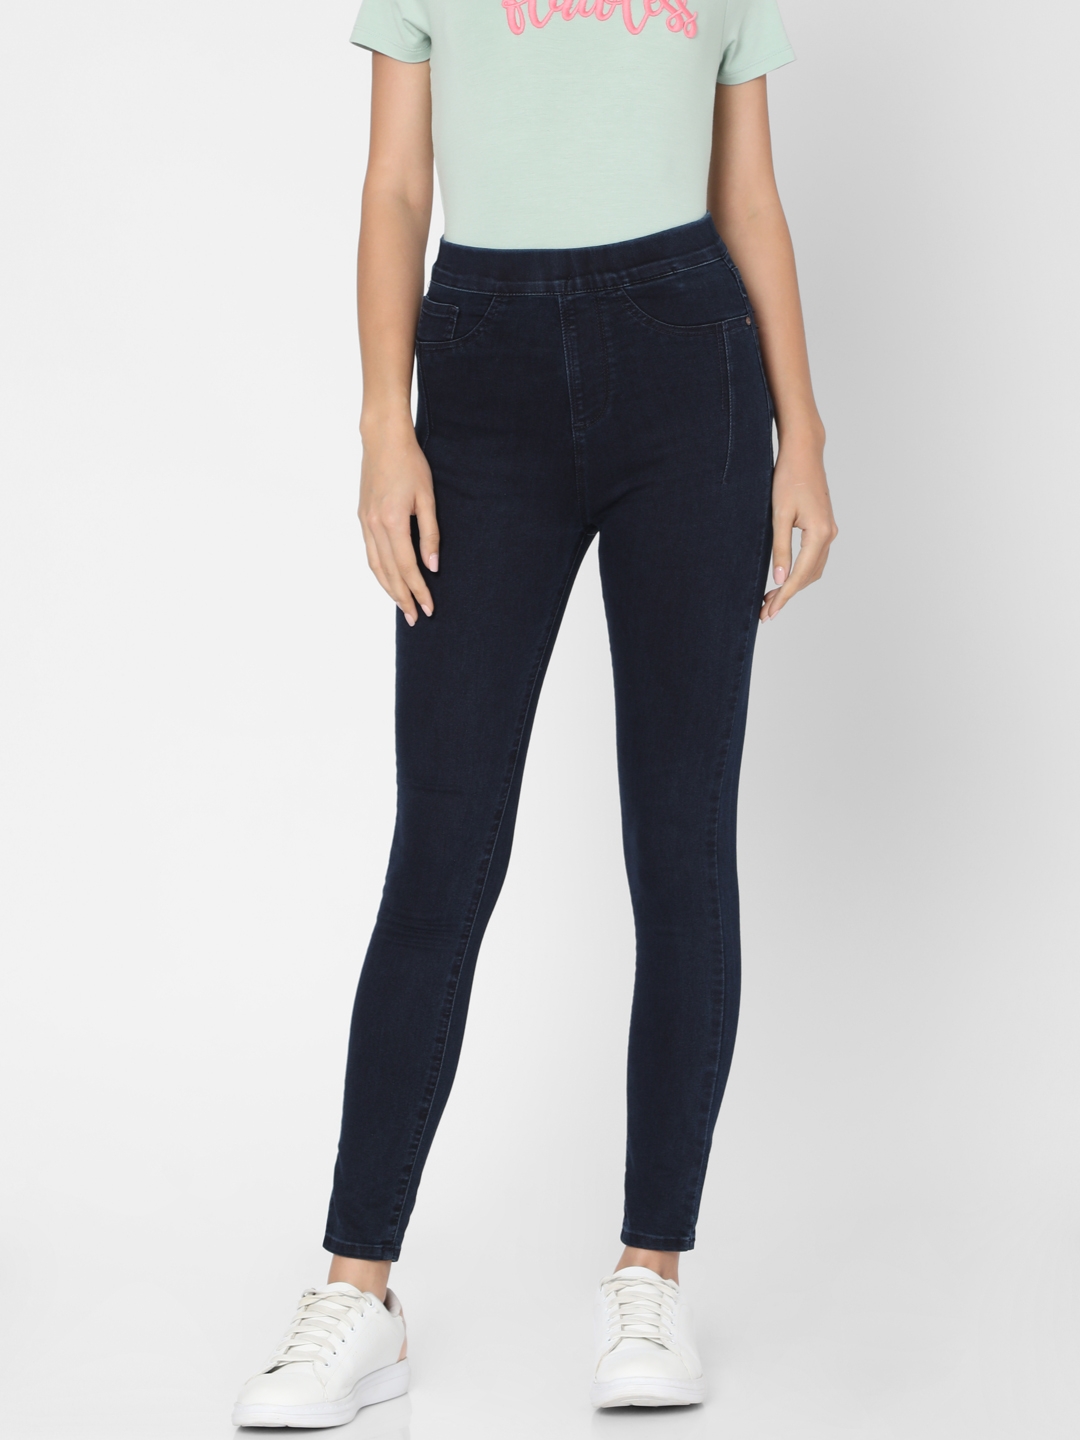 SPYKAR | Spykar Blue Cotton Women Jeans (Alicia)